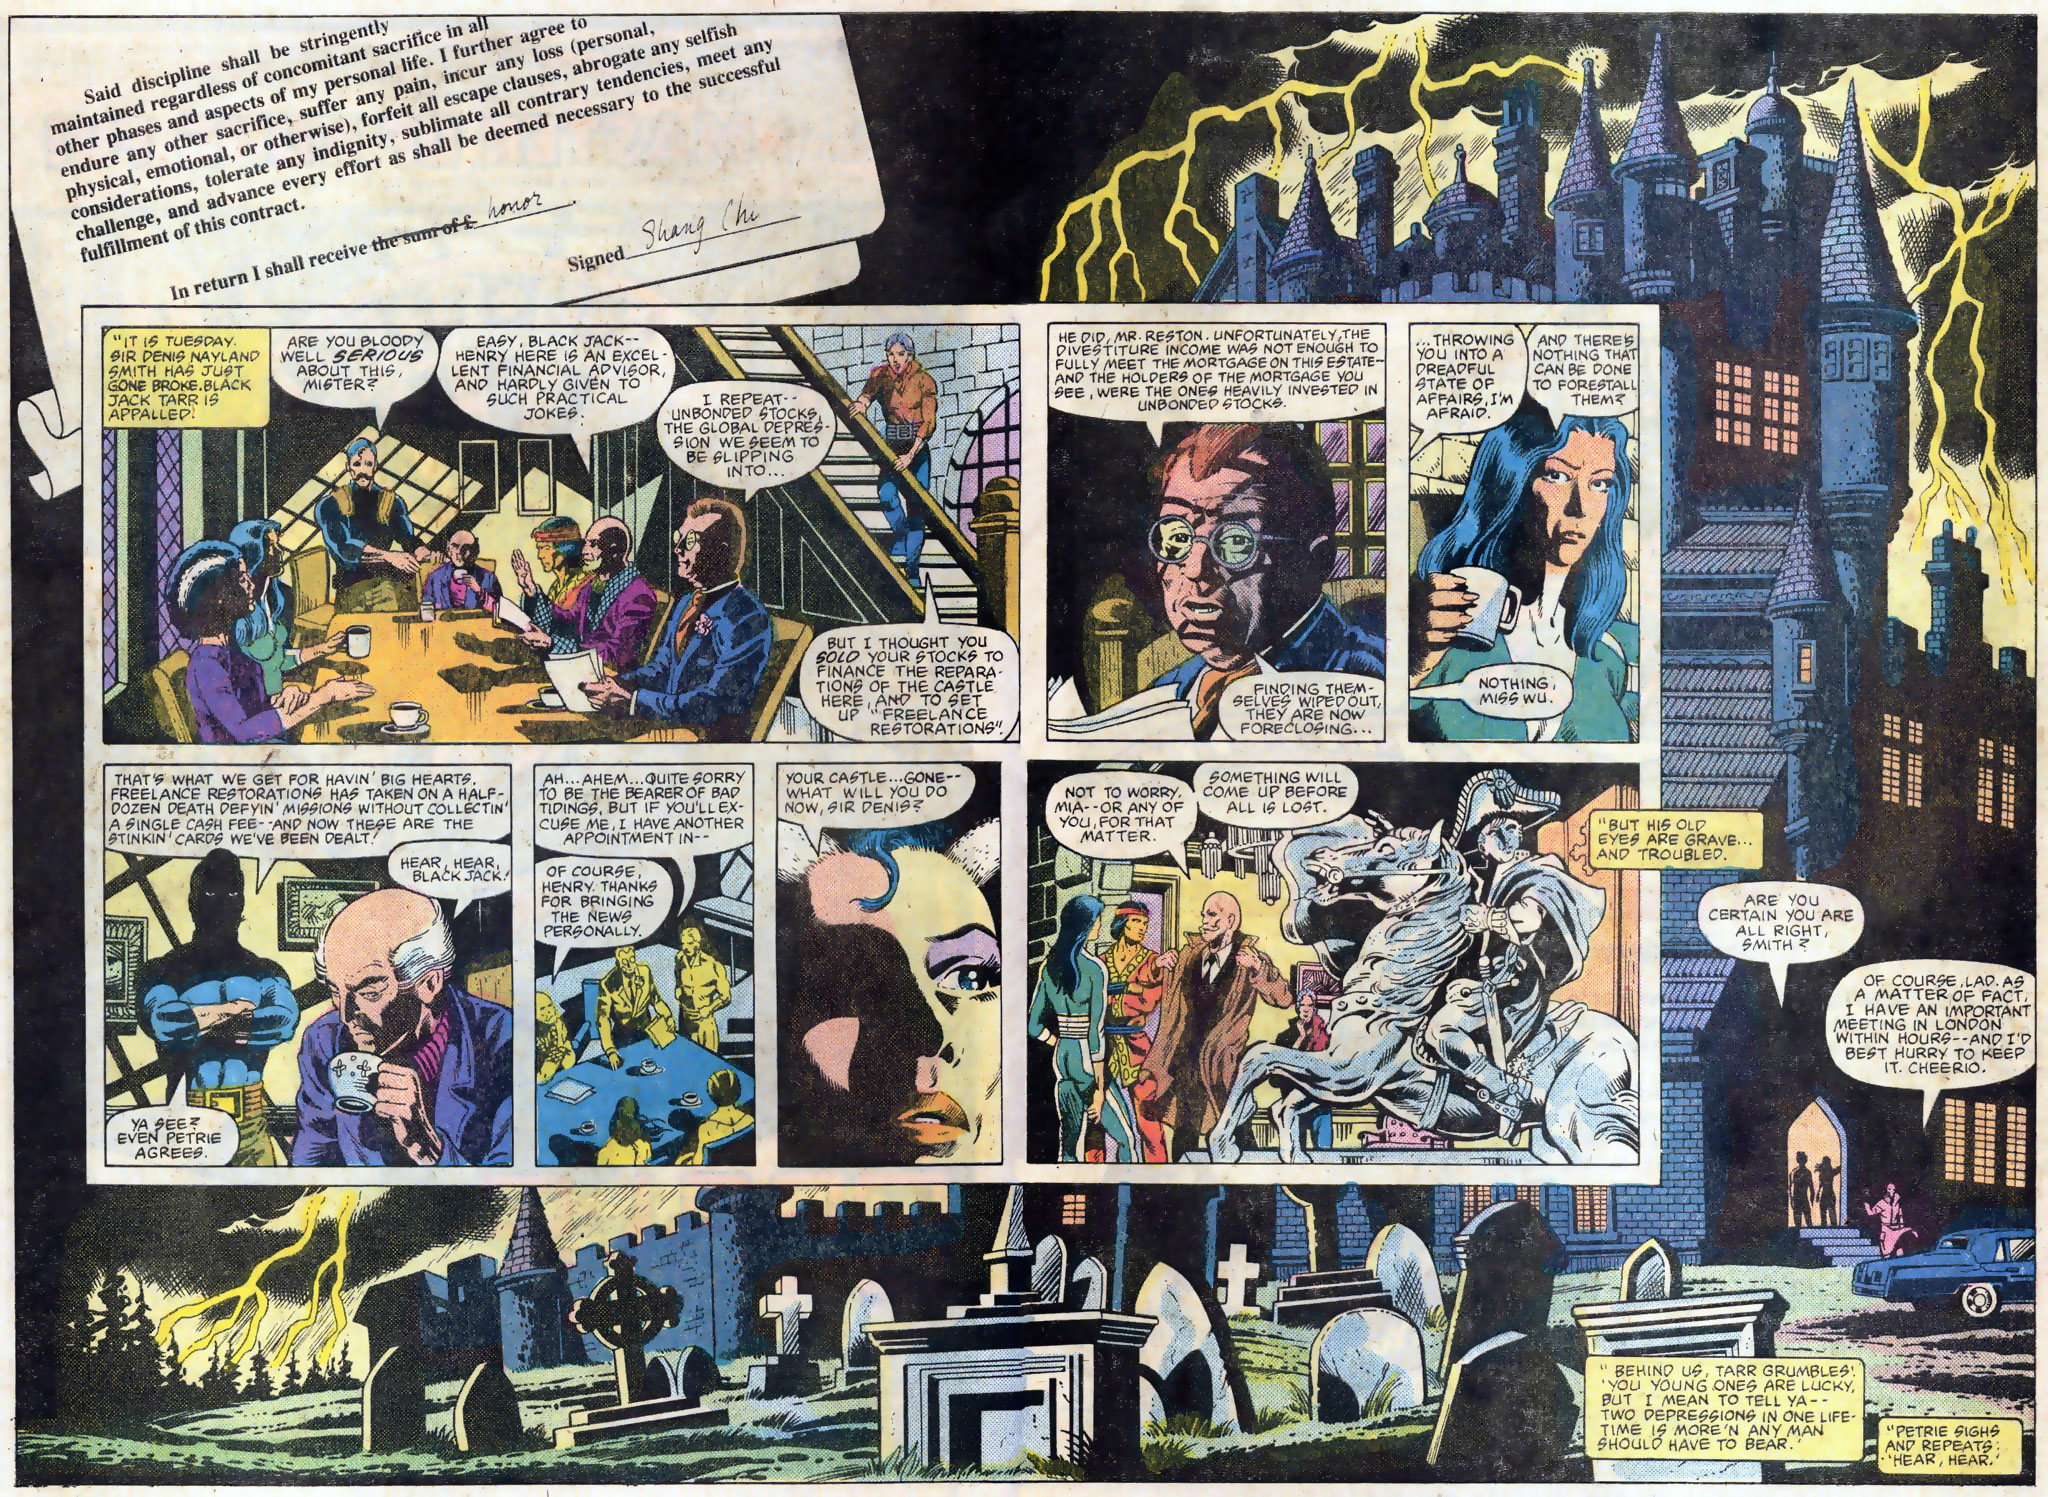 Master of Kung Fu (1974) Issue #115 #100 - English 3